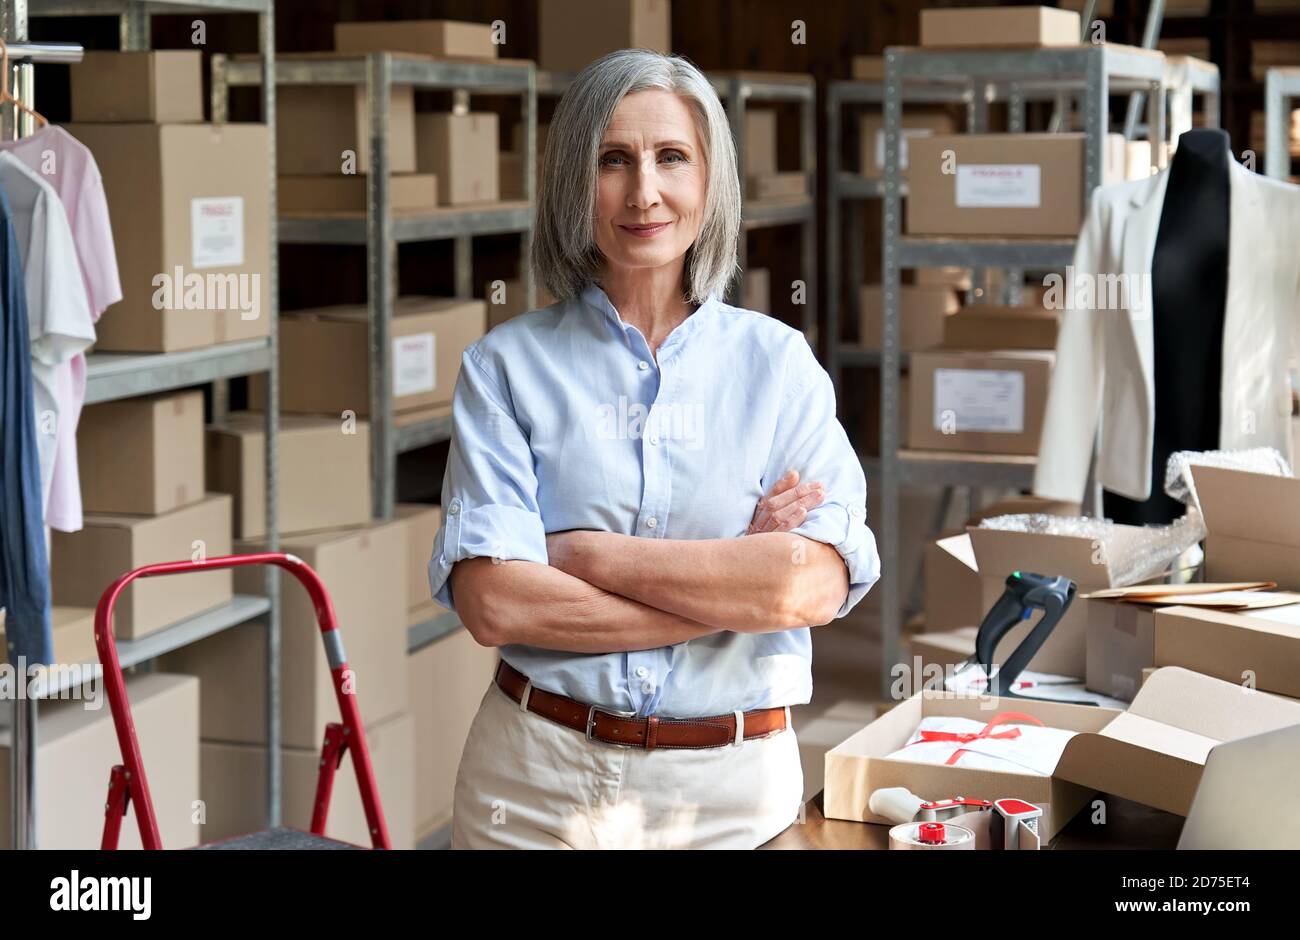 Female entrepreneur clothing store business owner in warehouse, portrait. Stock Photo